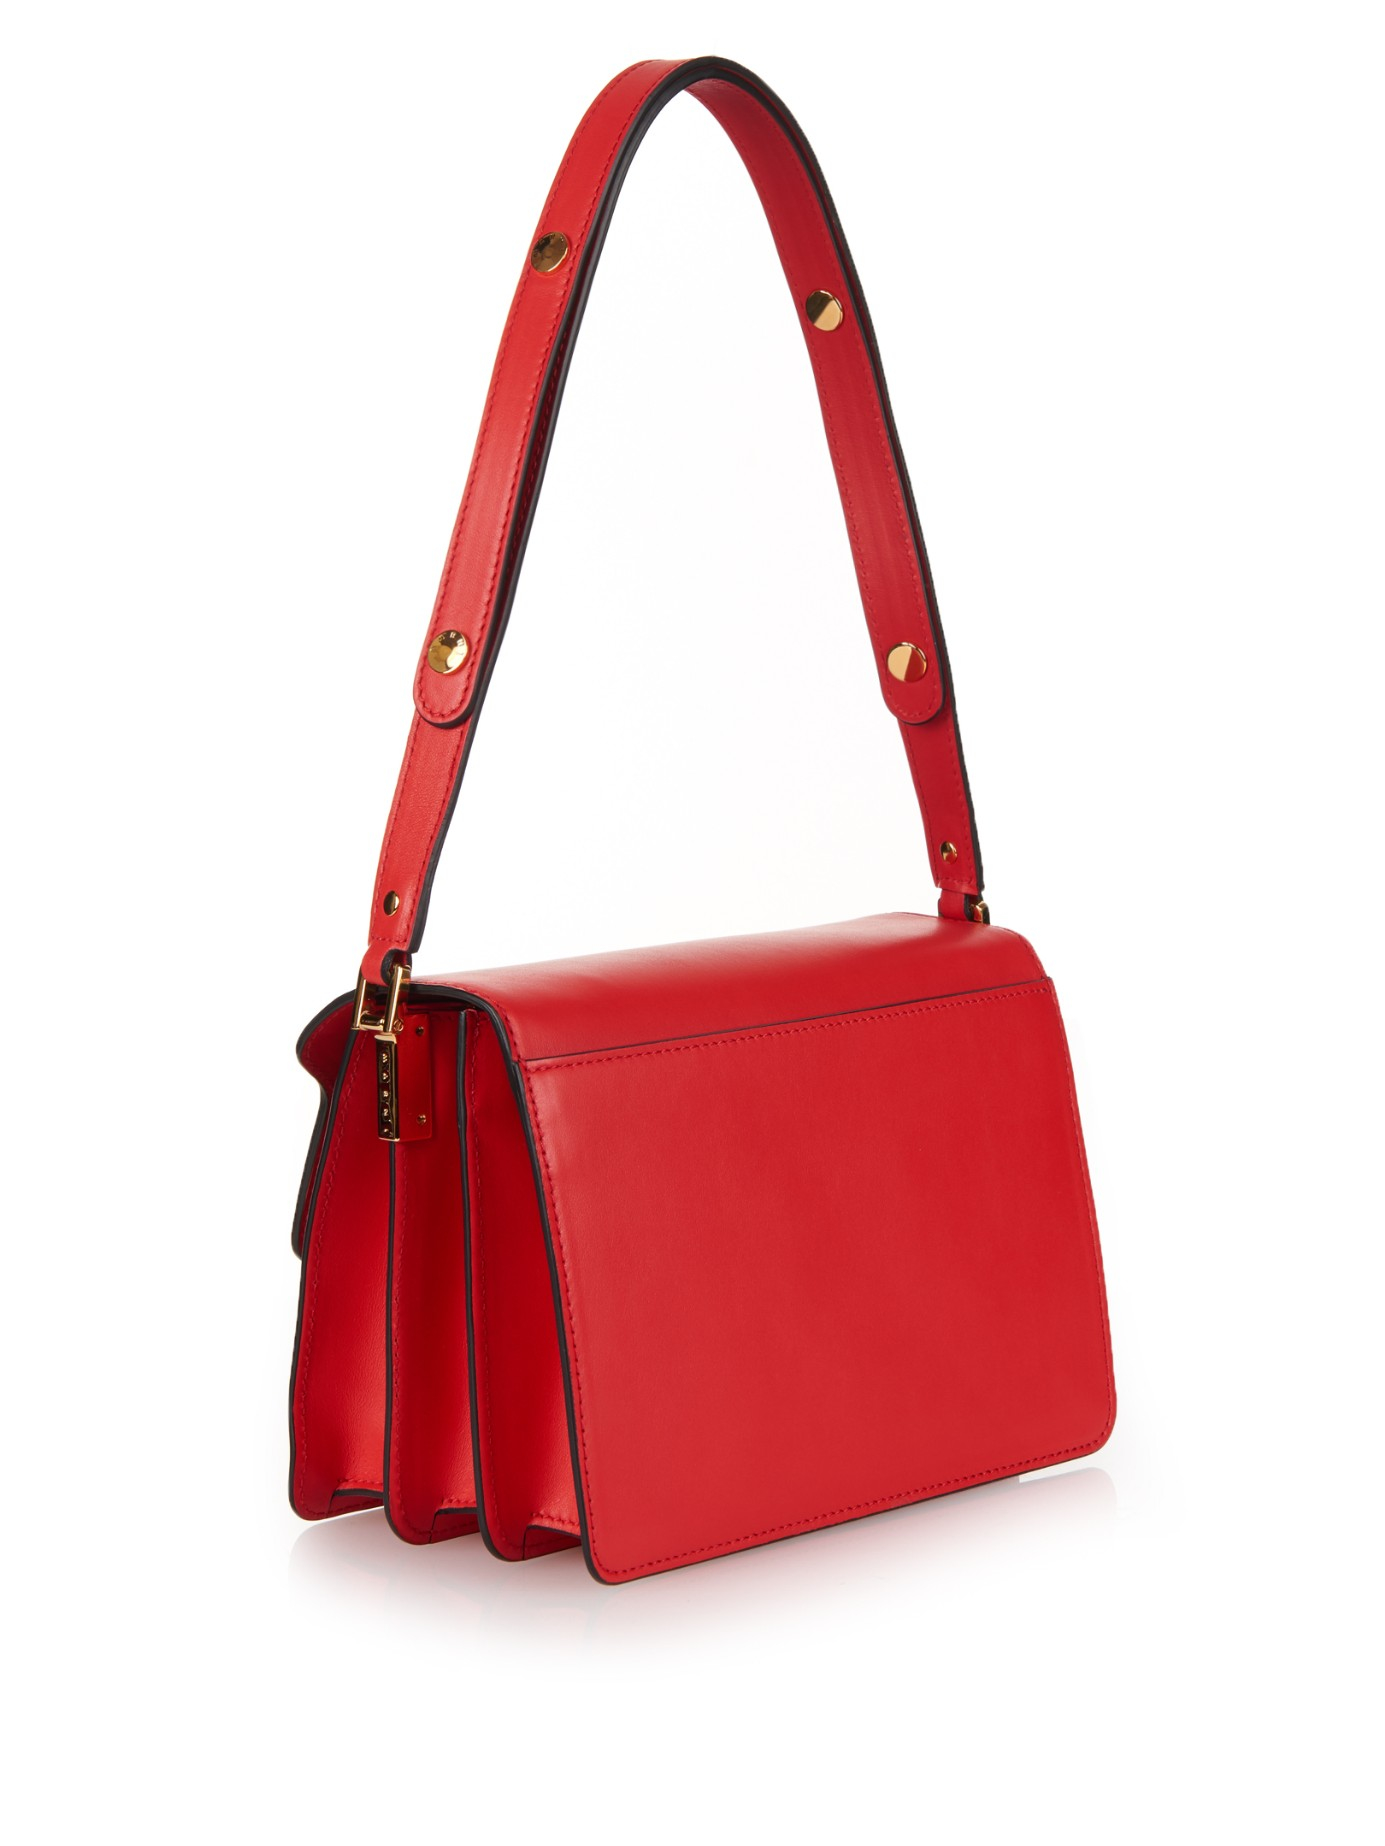 Marni Trunk Medium Leather Shoulder Bag in Red - Lyst